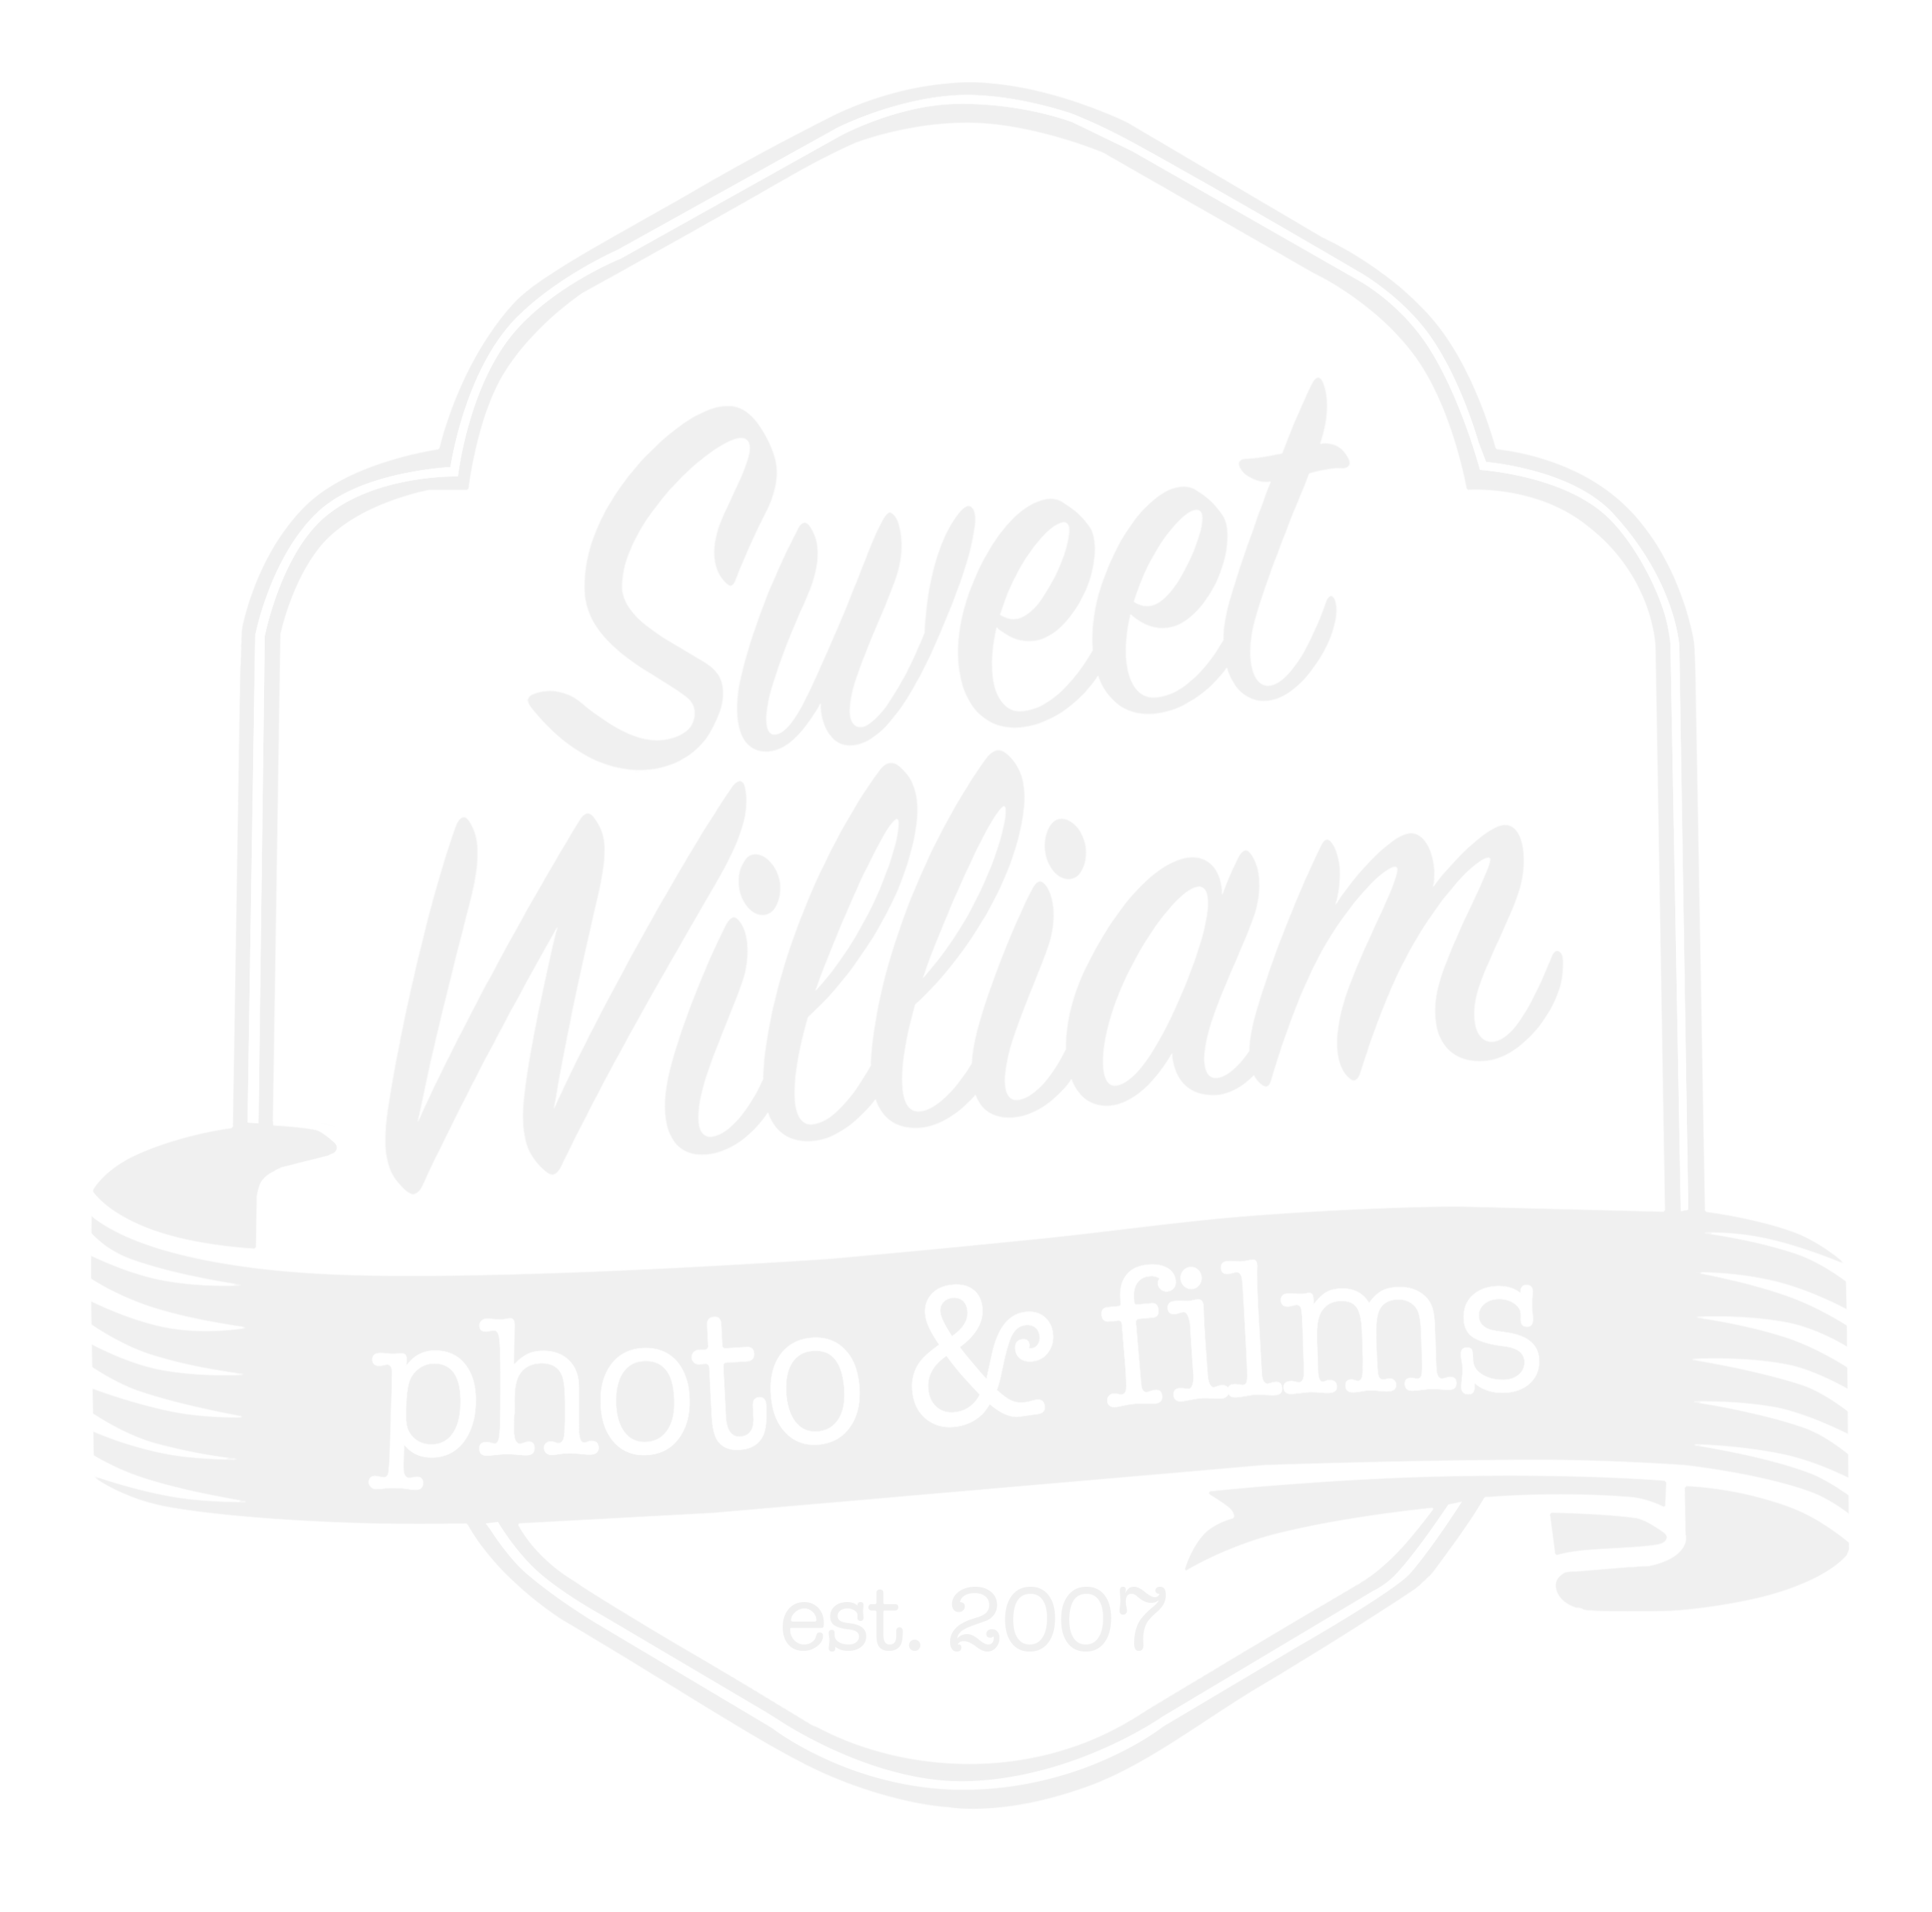 Sweet William Photo & Films